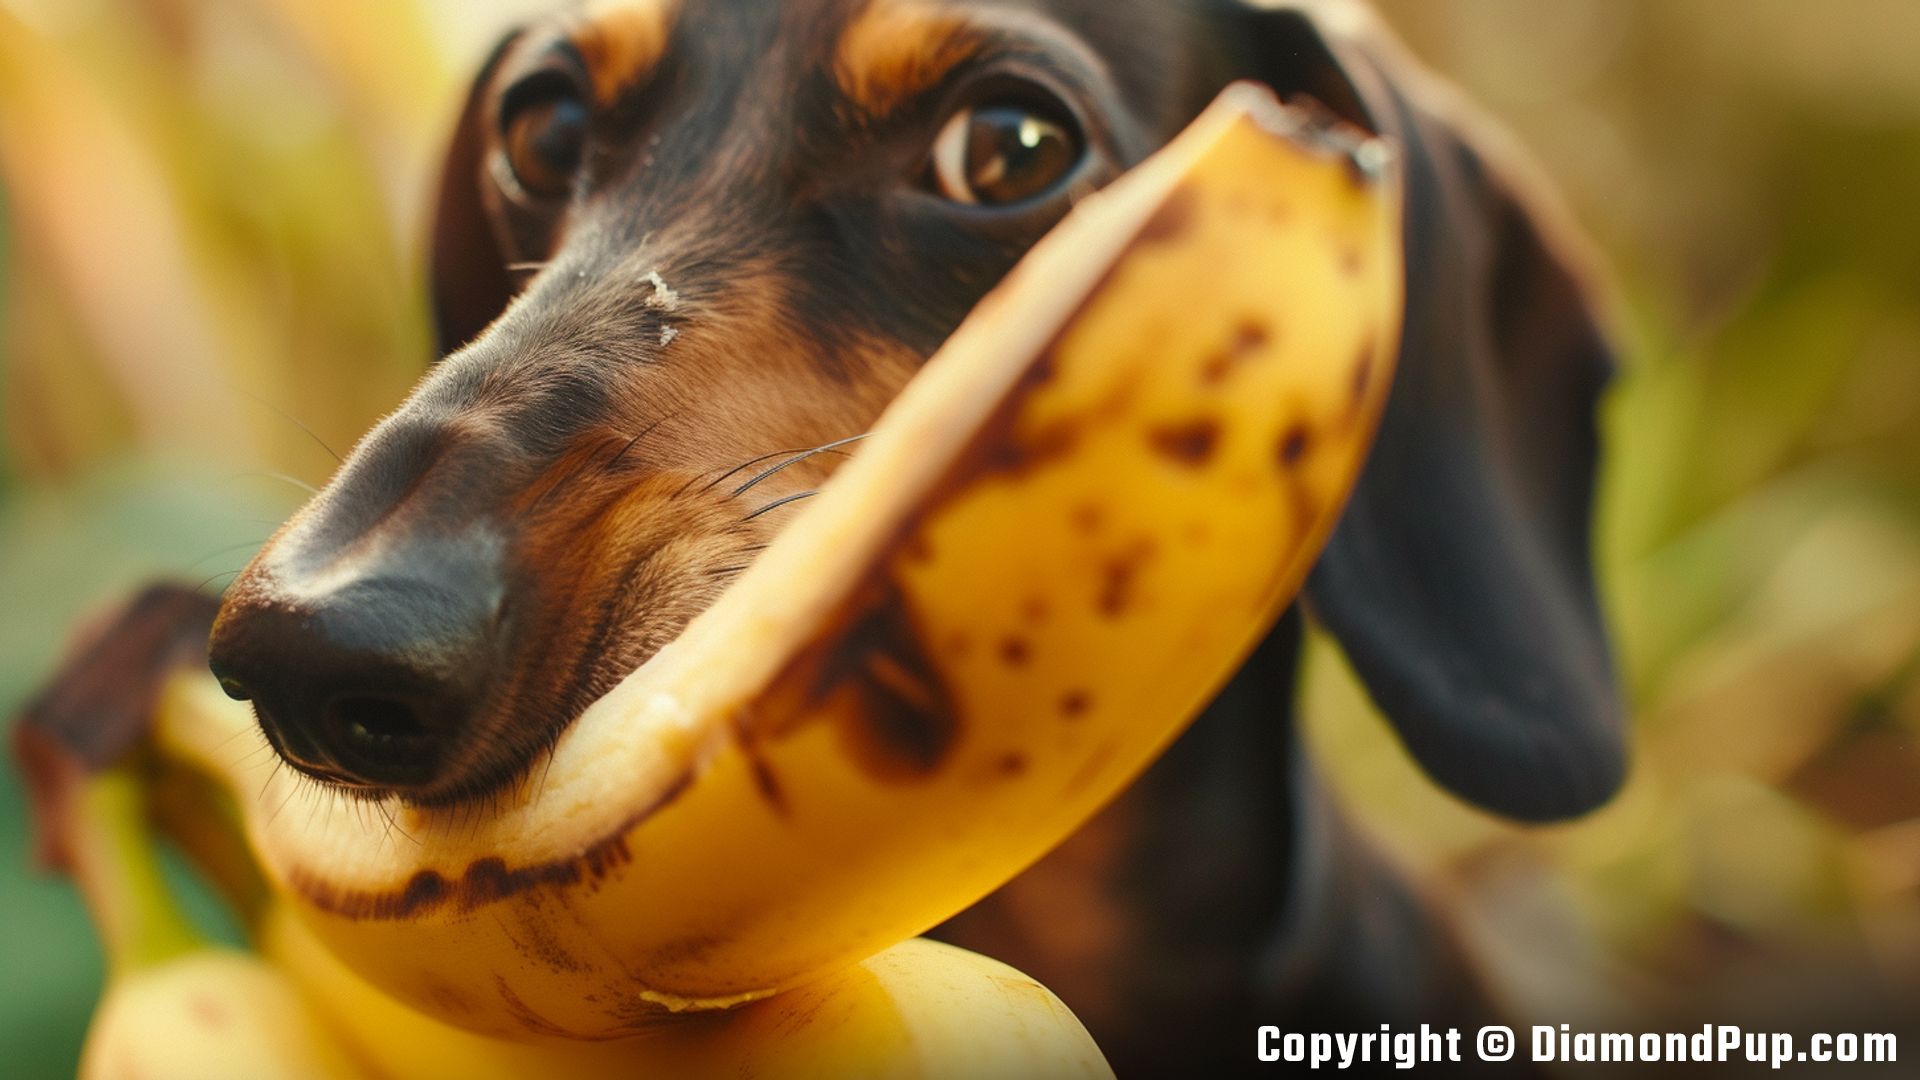 Photo of an Adorable Dachshund Eating Banana